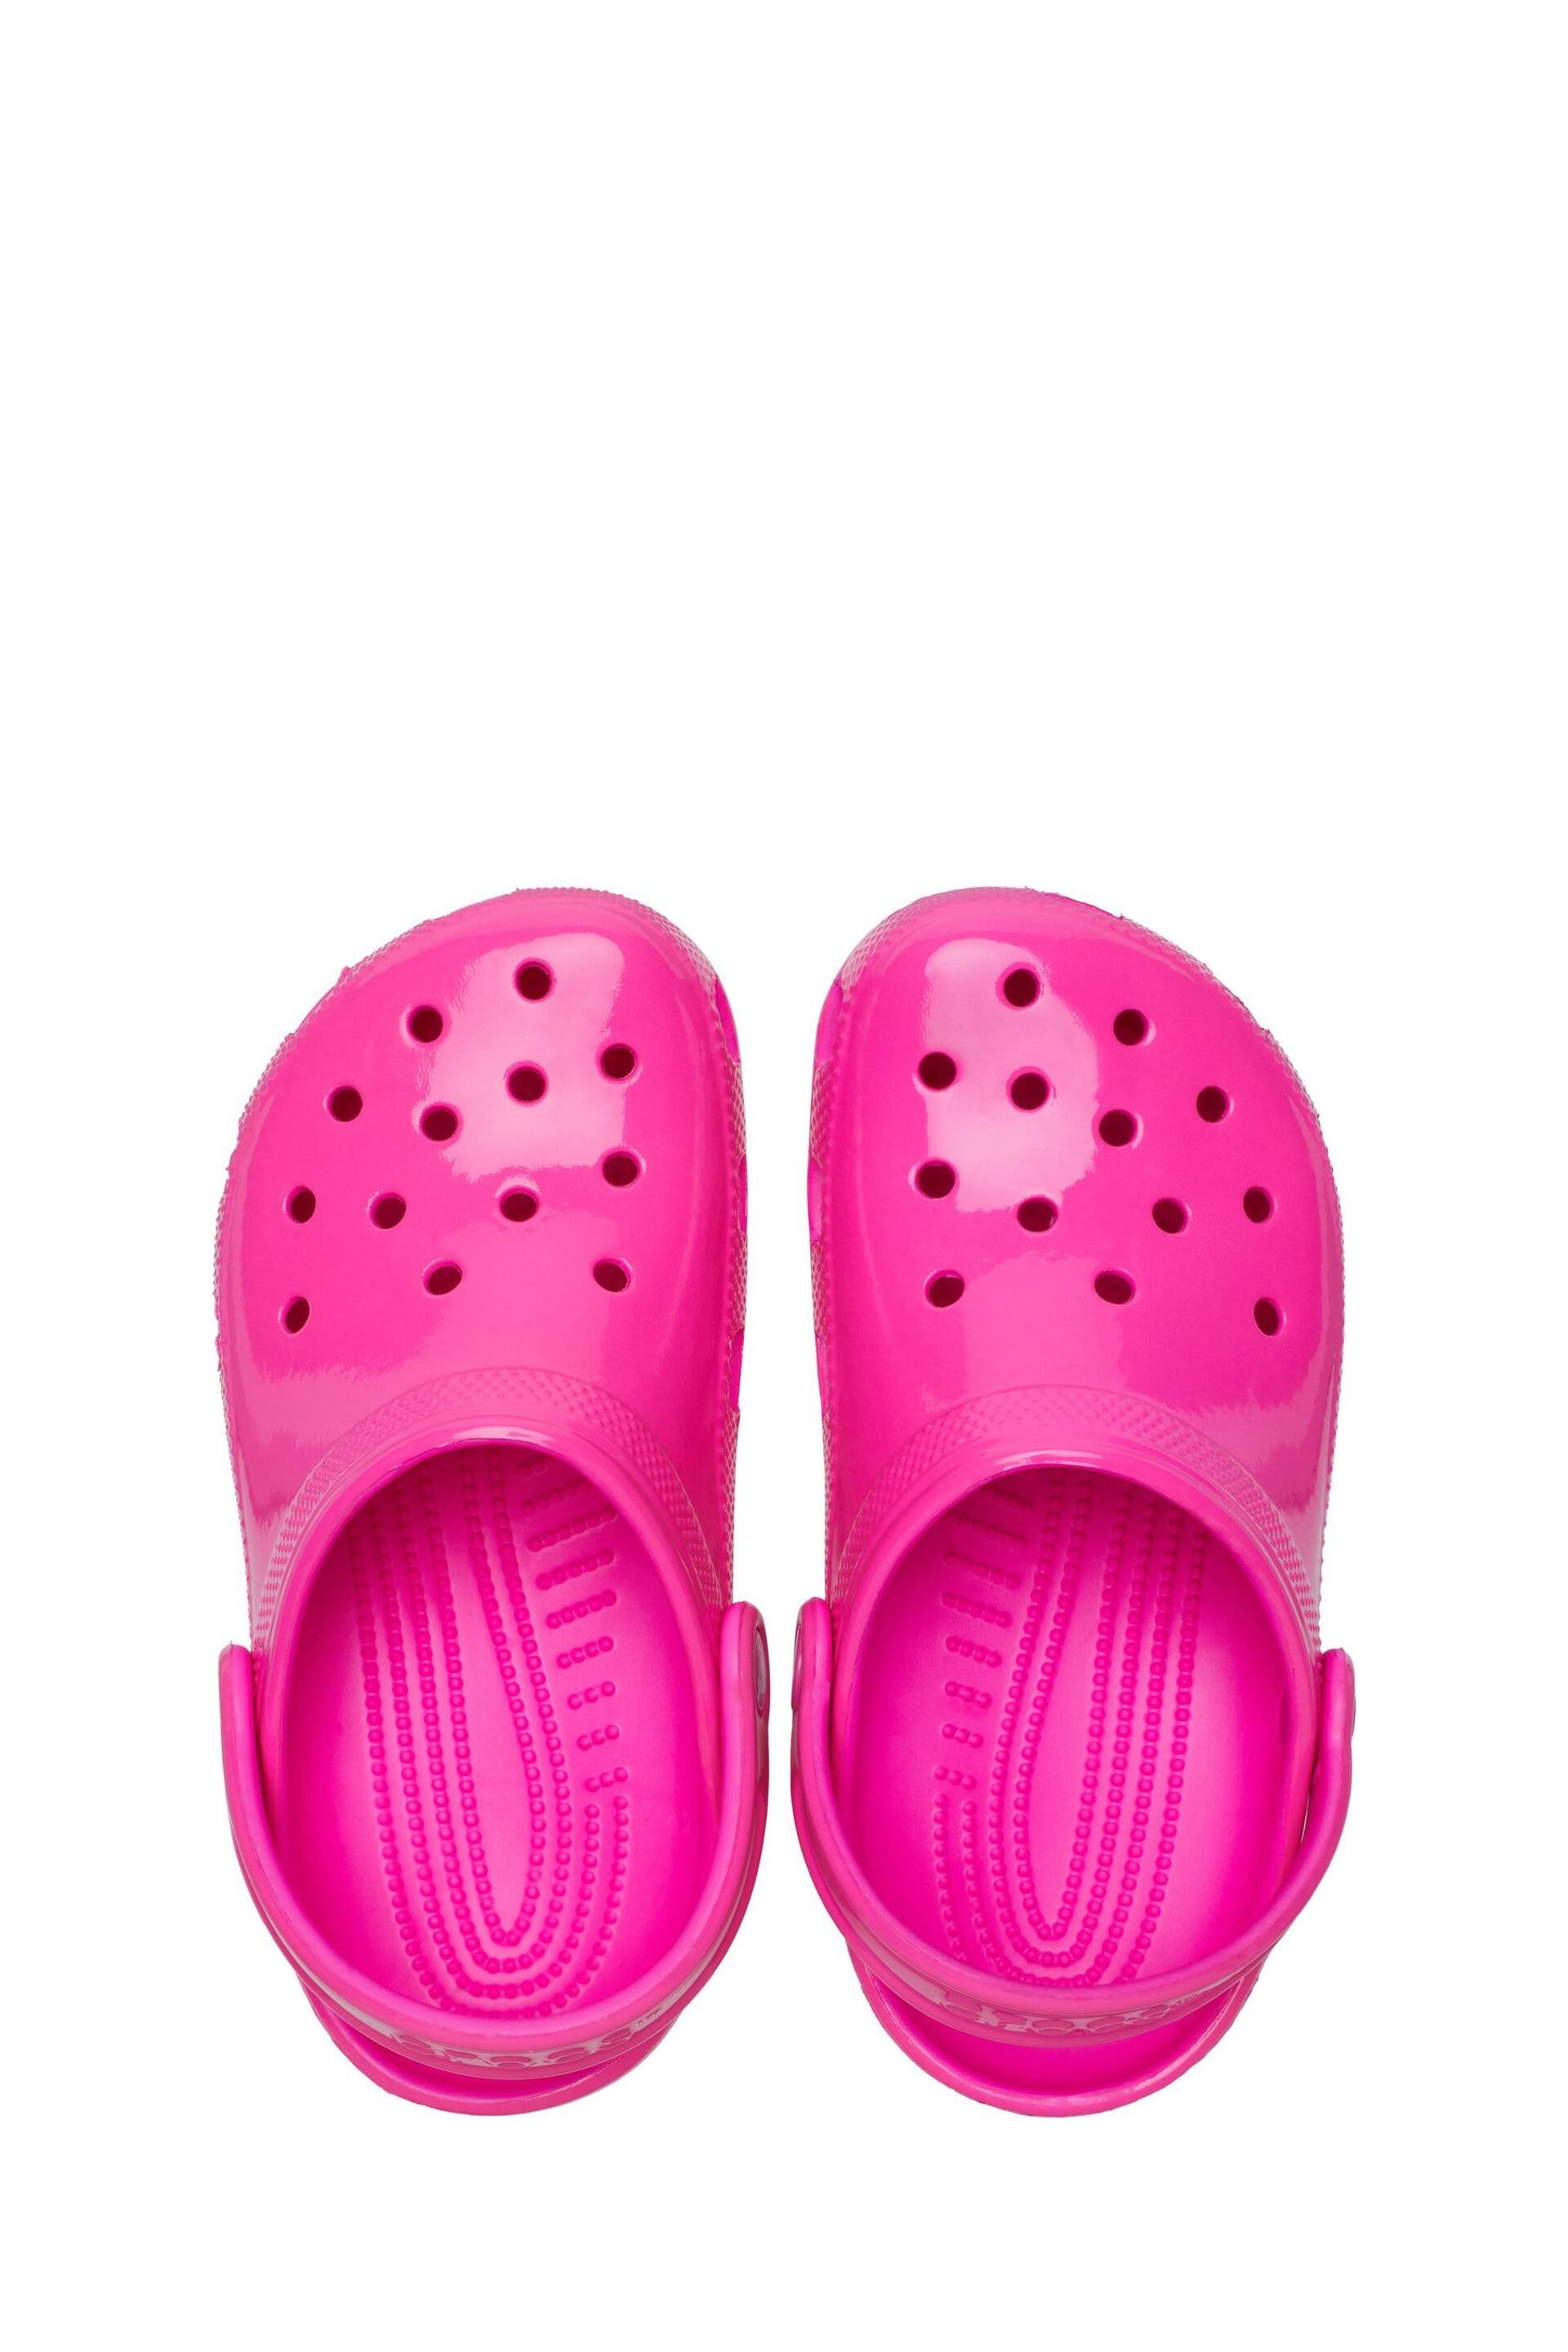 Crocs Classic Neon Toddler Clog - Image 2 of 7